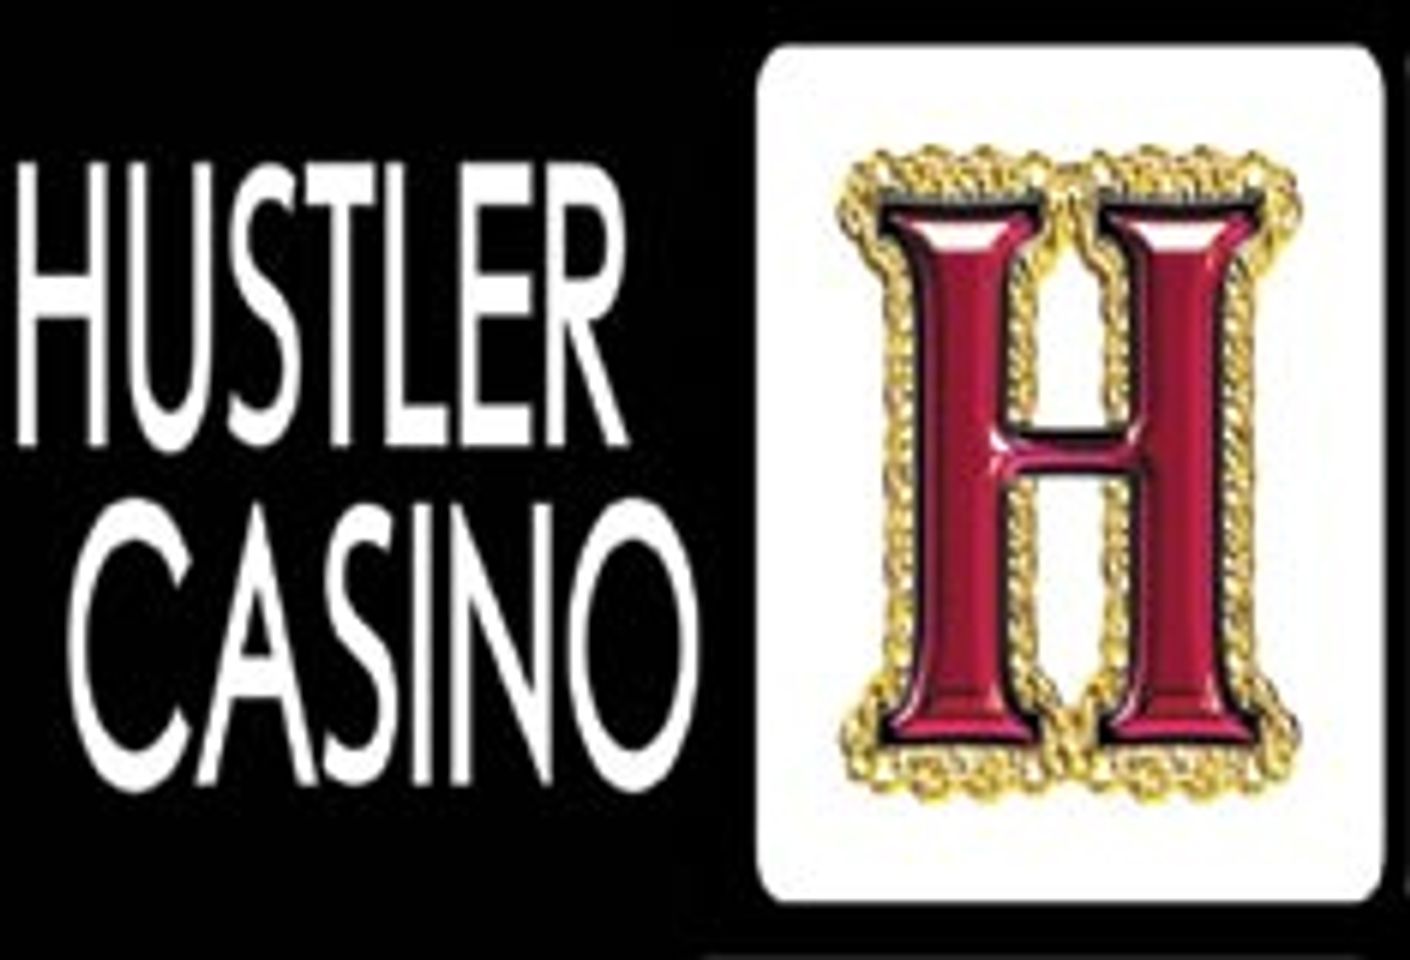 Hustler Casino Overcomes Prejudice Against Porn in Political Battle